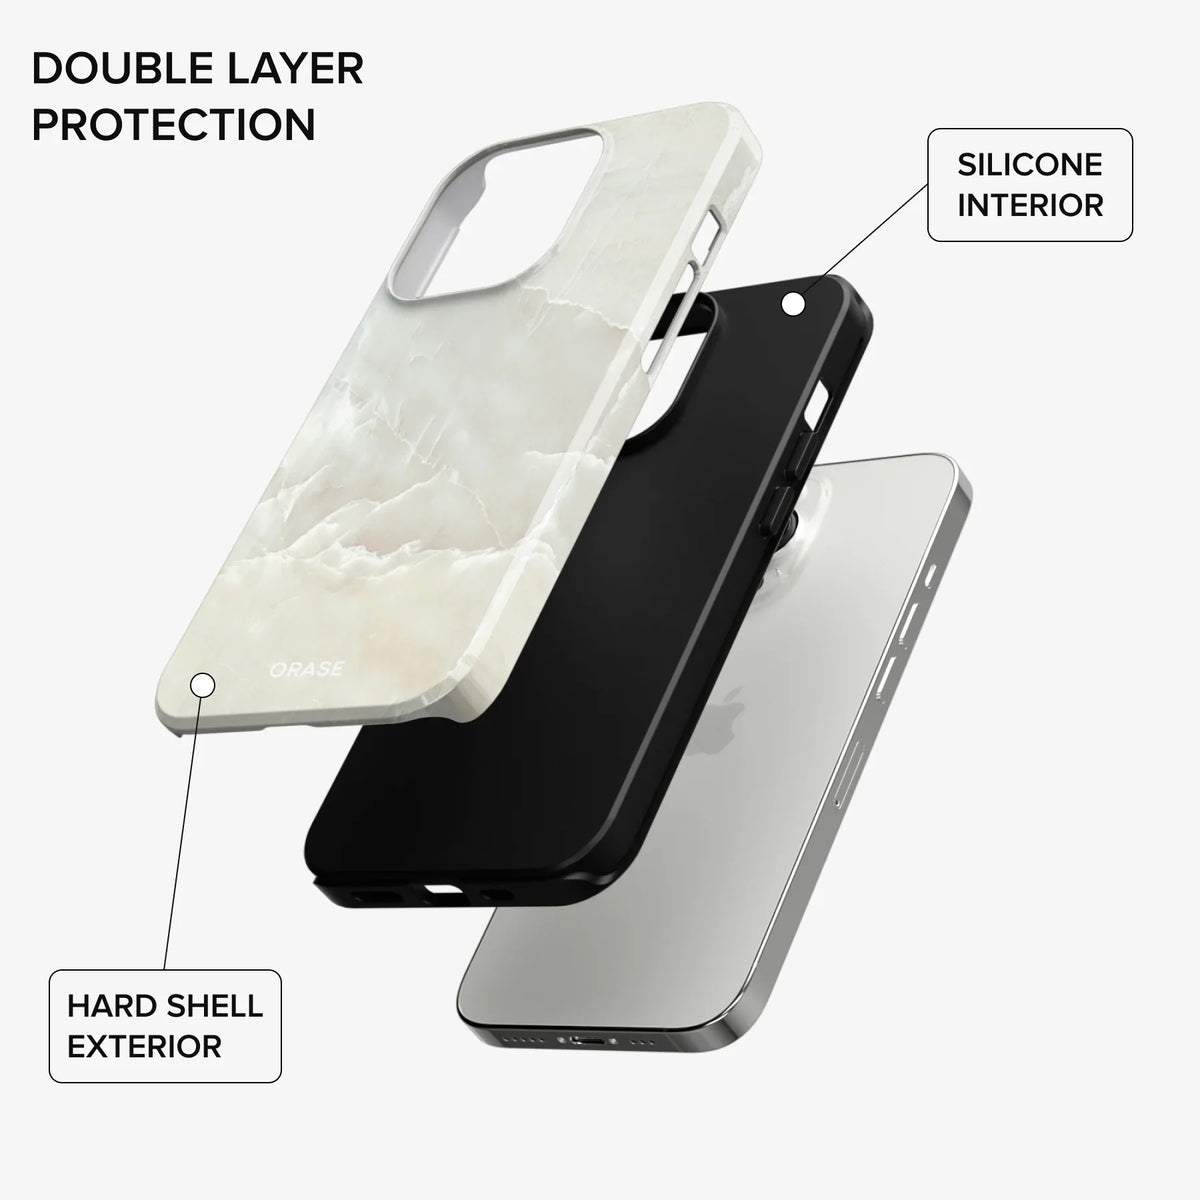 Ivory Marble iPhone Case - iPhone 13 Pro